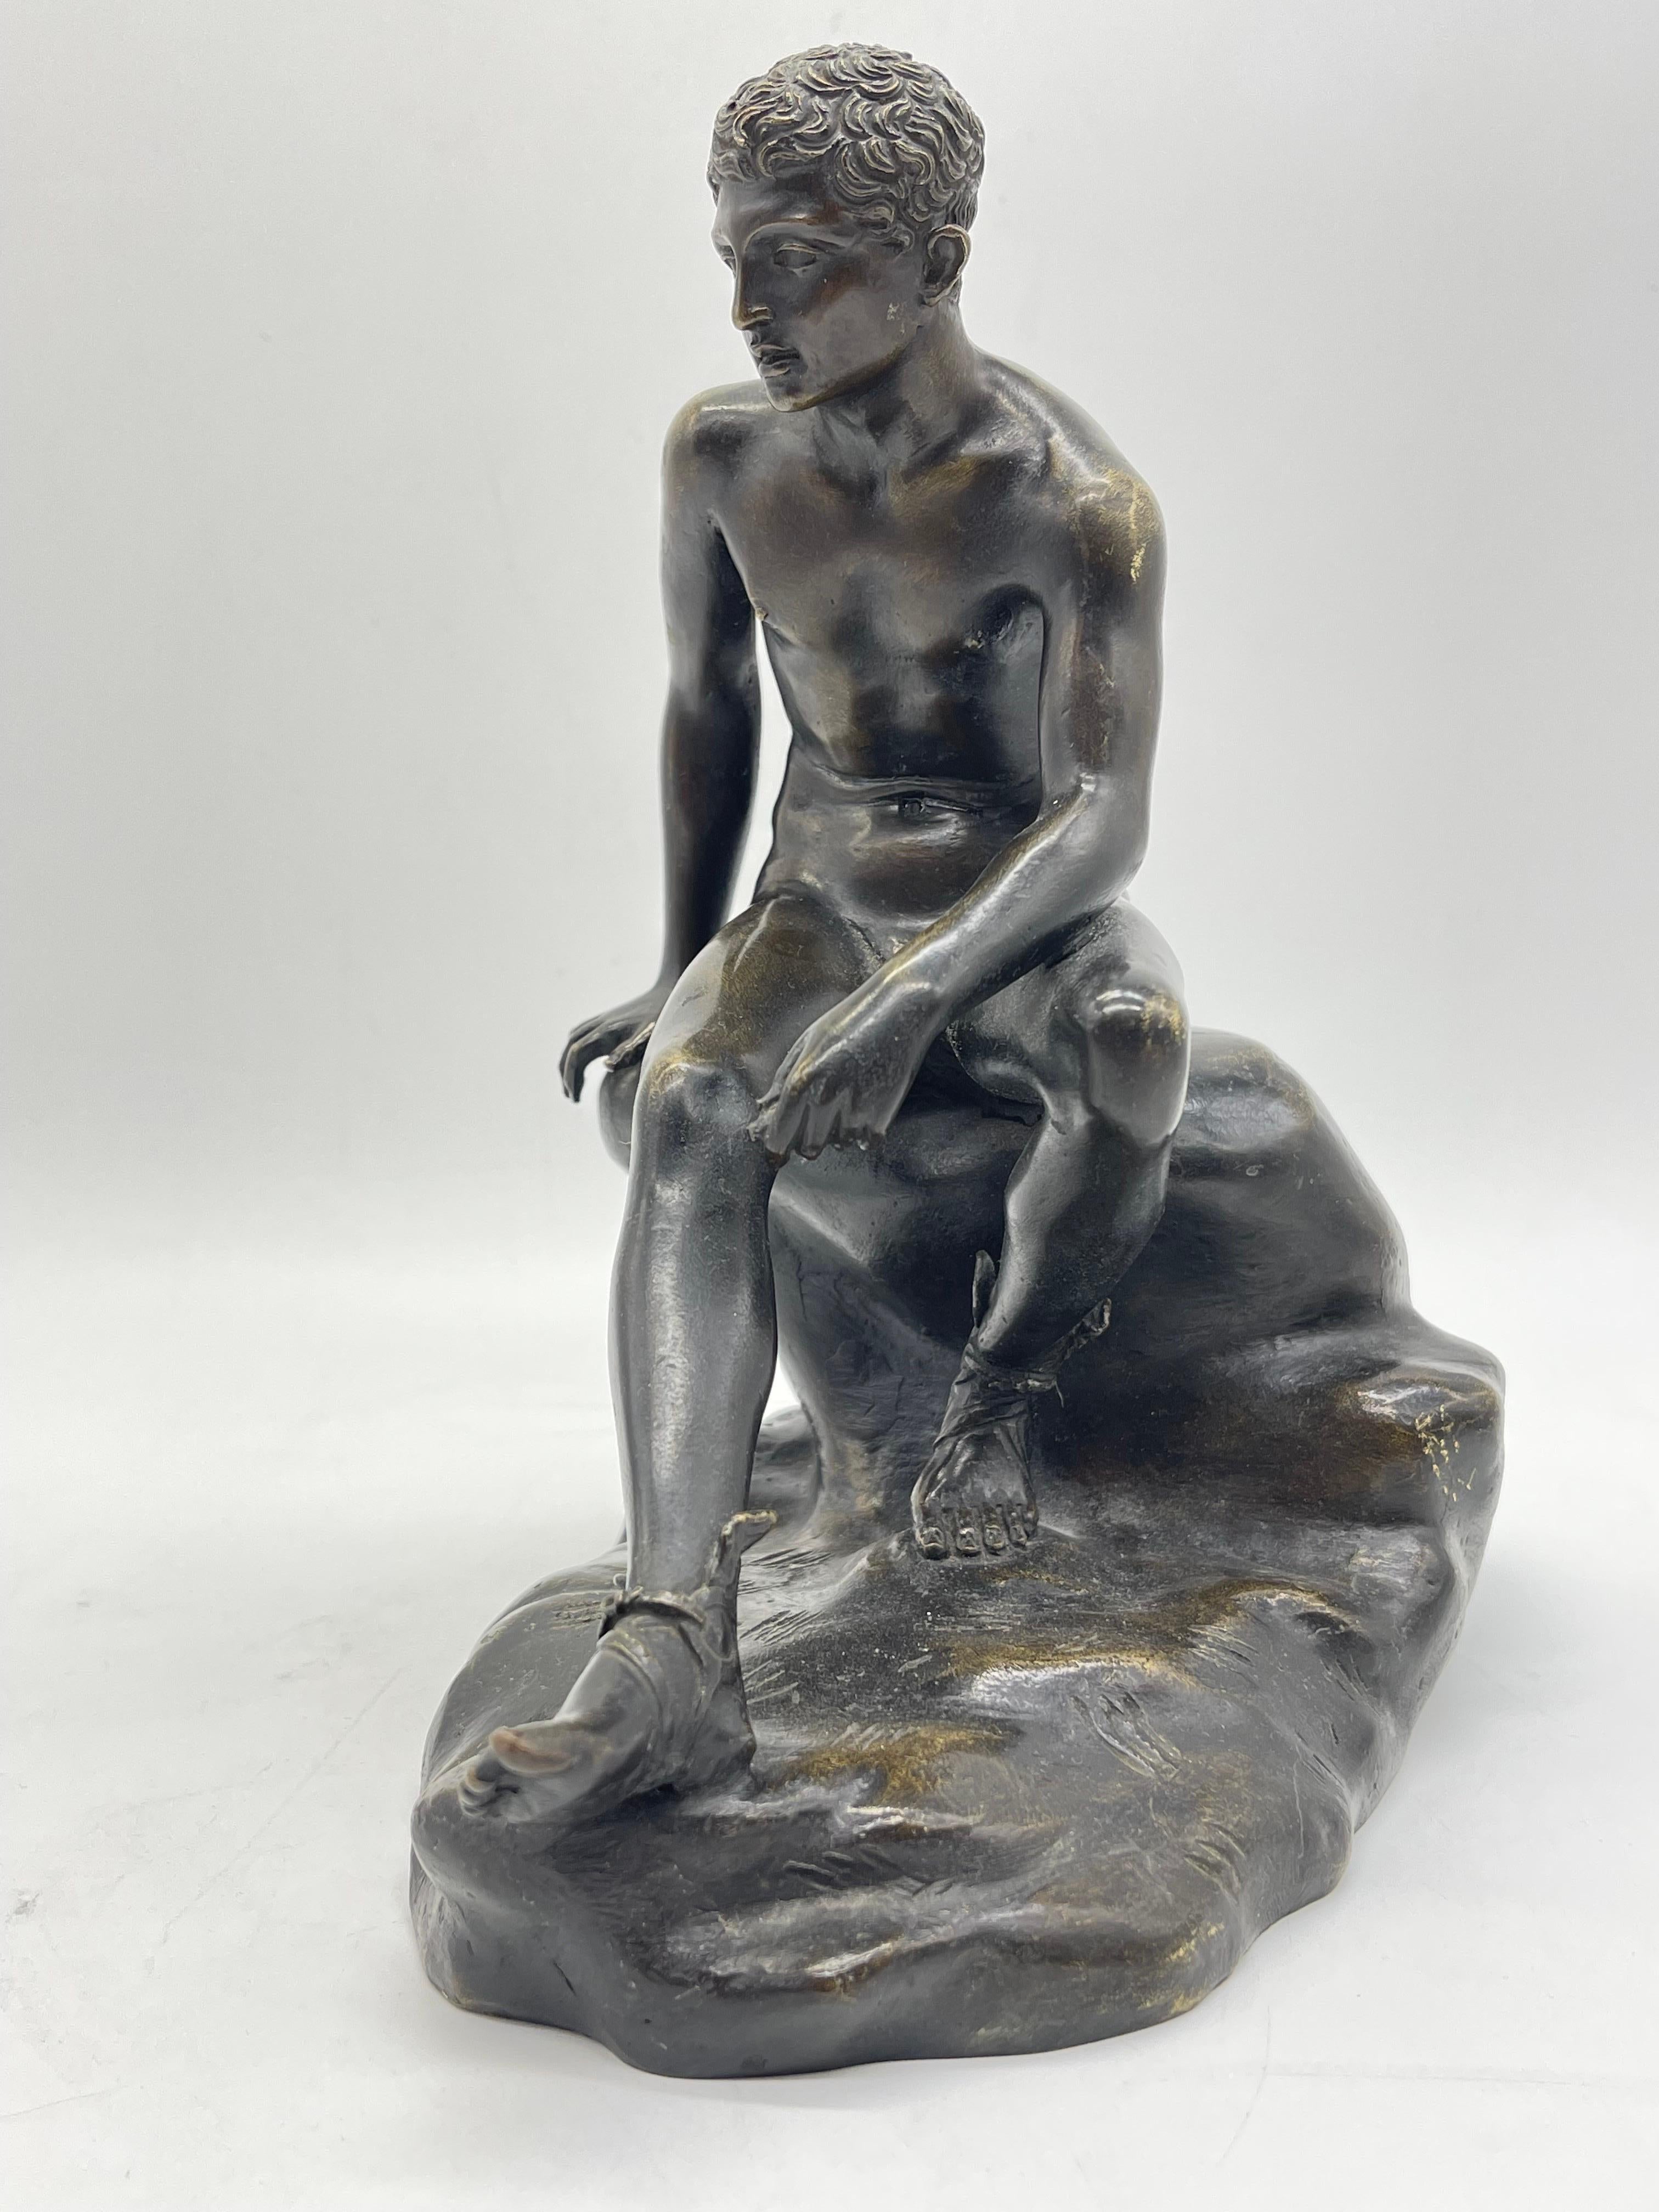 Seated athletic bronze sculpture / Figure Greek - Roman mythology For Sale 1